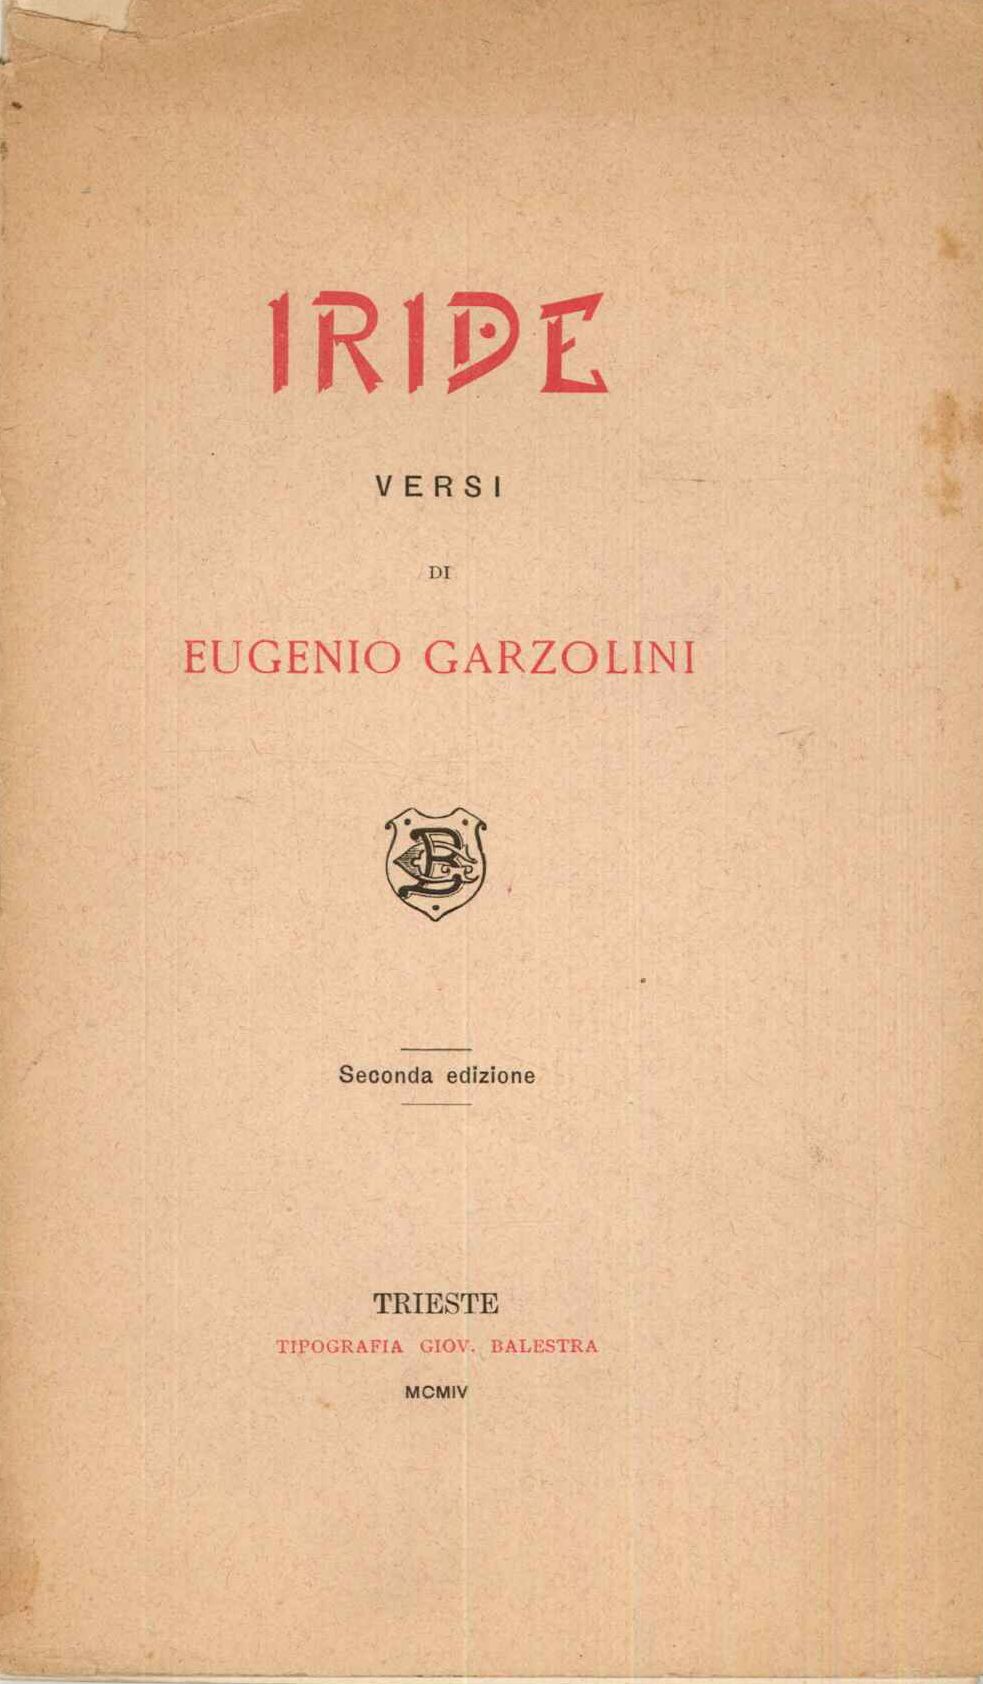 Iride. Versi di Eugenio Garzolini